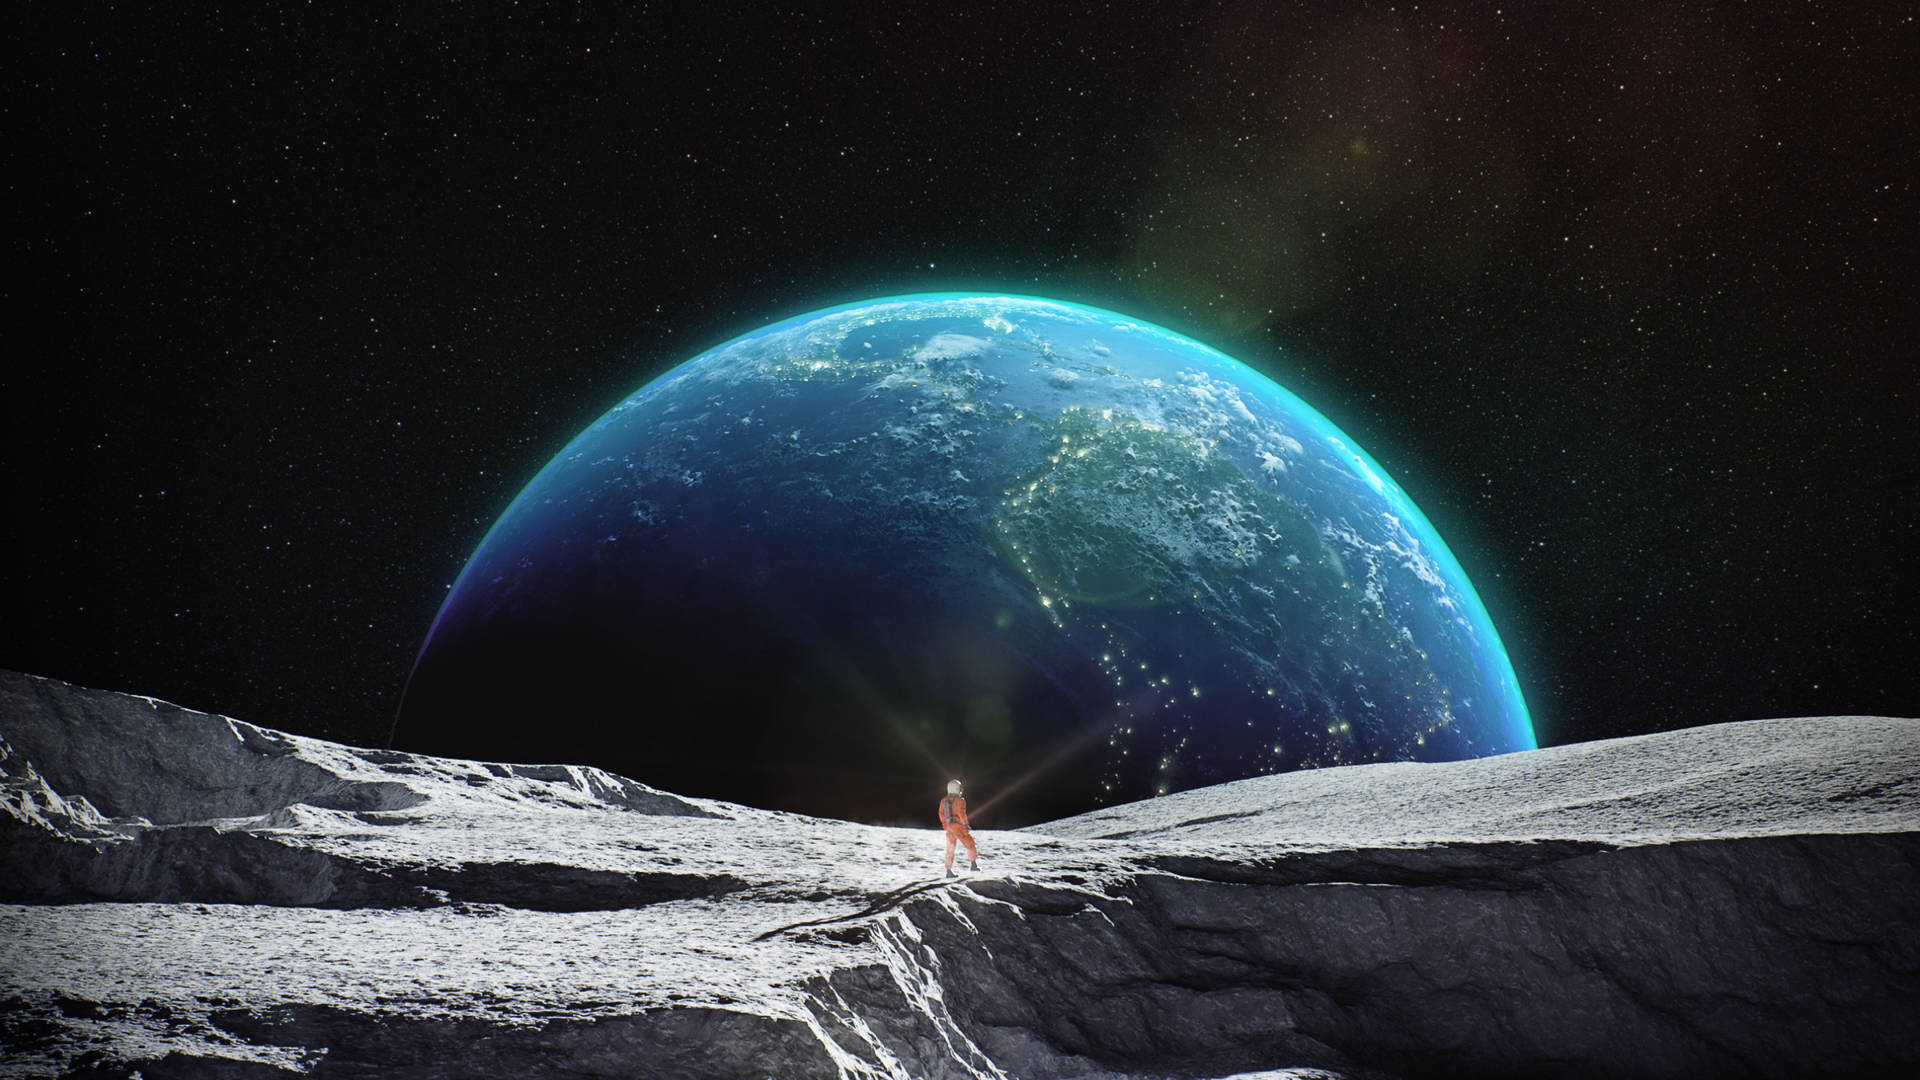 Moon 4k Astronaut Viewing Earth